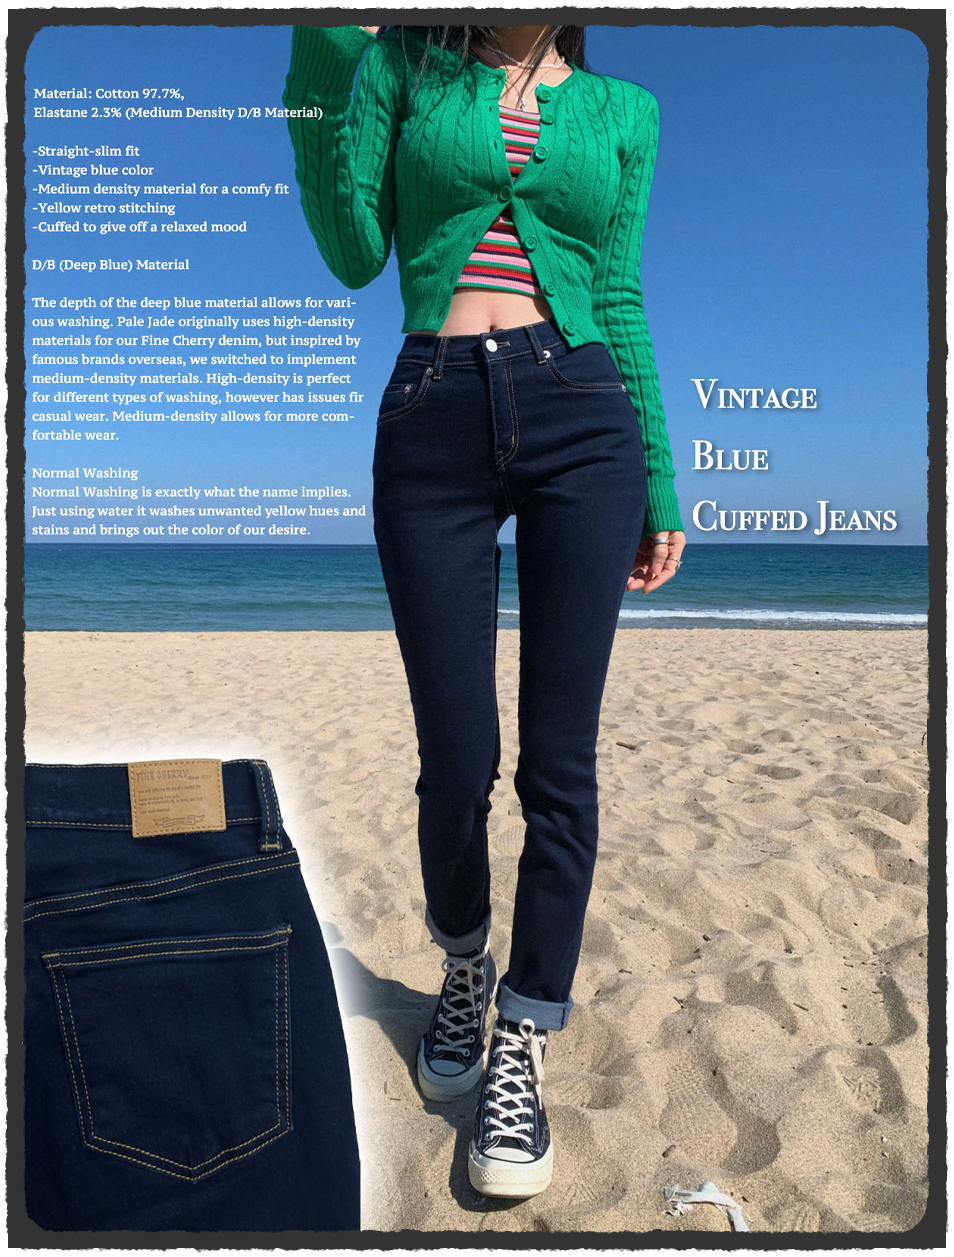 Vintage Blue Cuffed Jeans